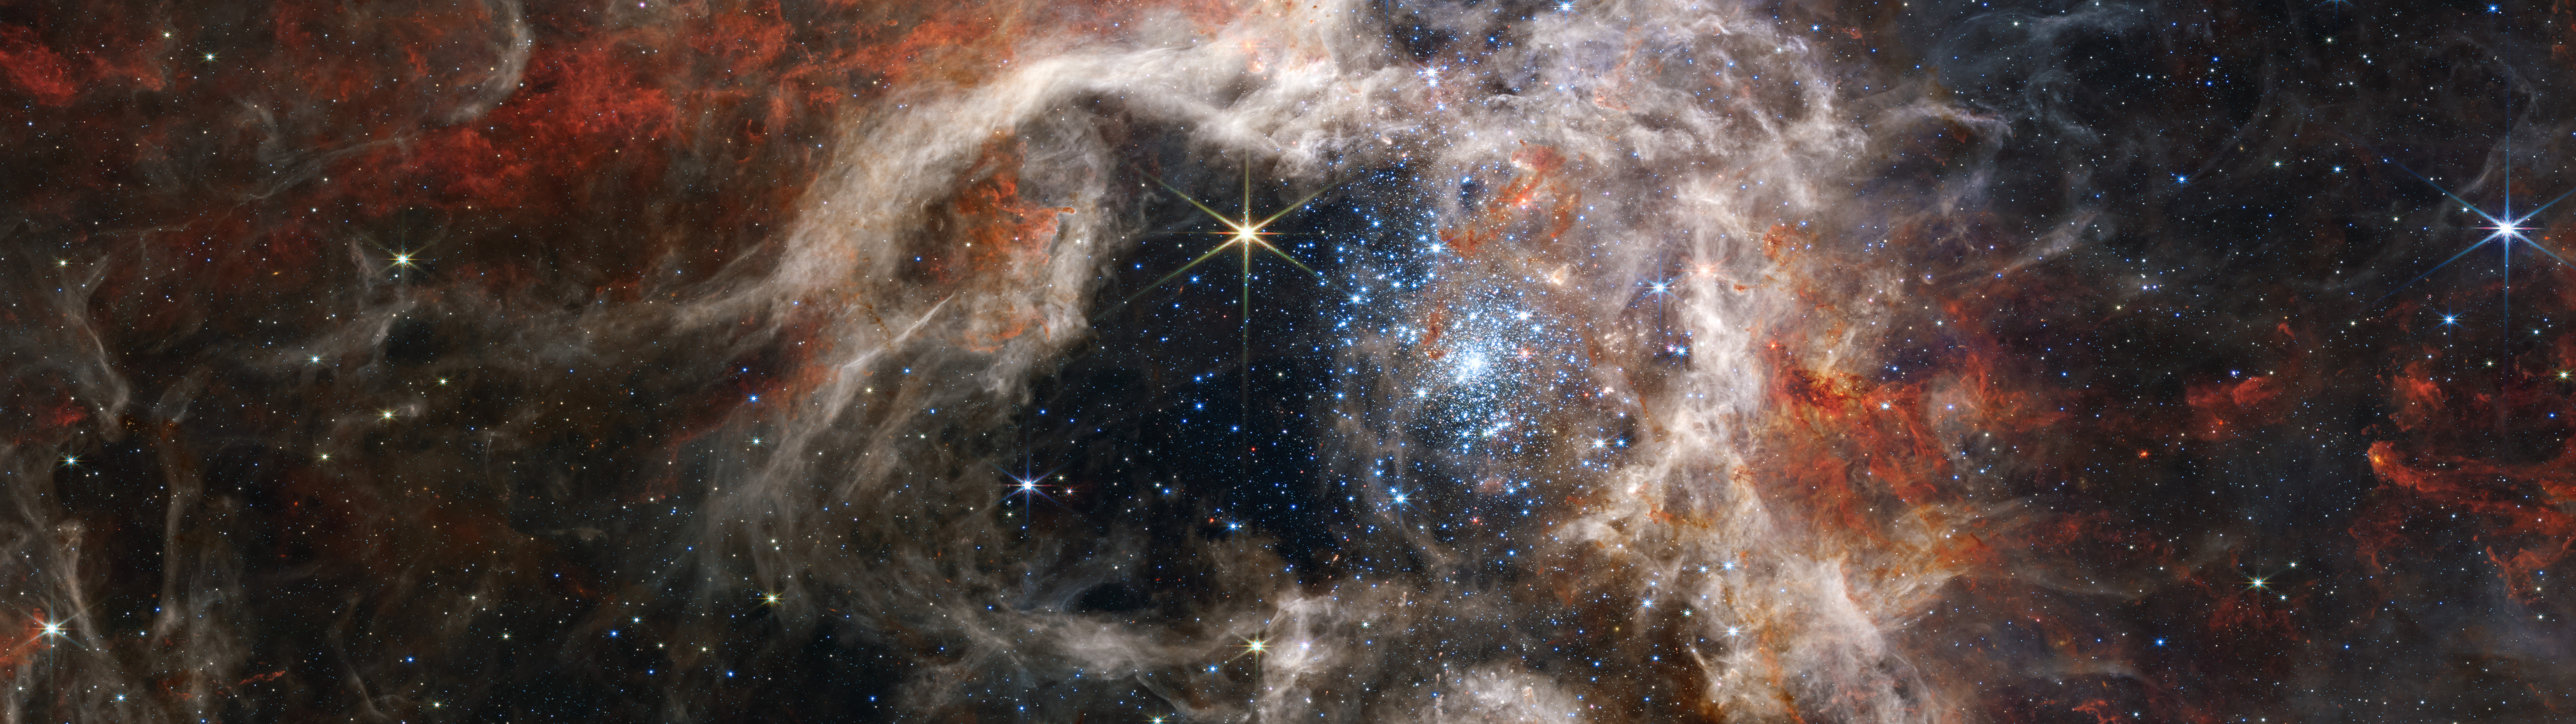 General 5120x1440 James Webb Space Telescope science ultrawide space stars infrared Tarantula Nebula nebula